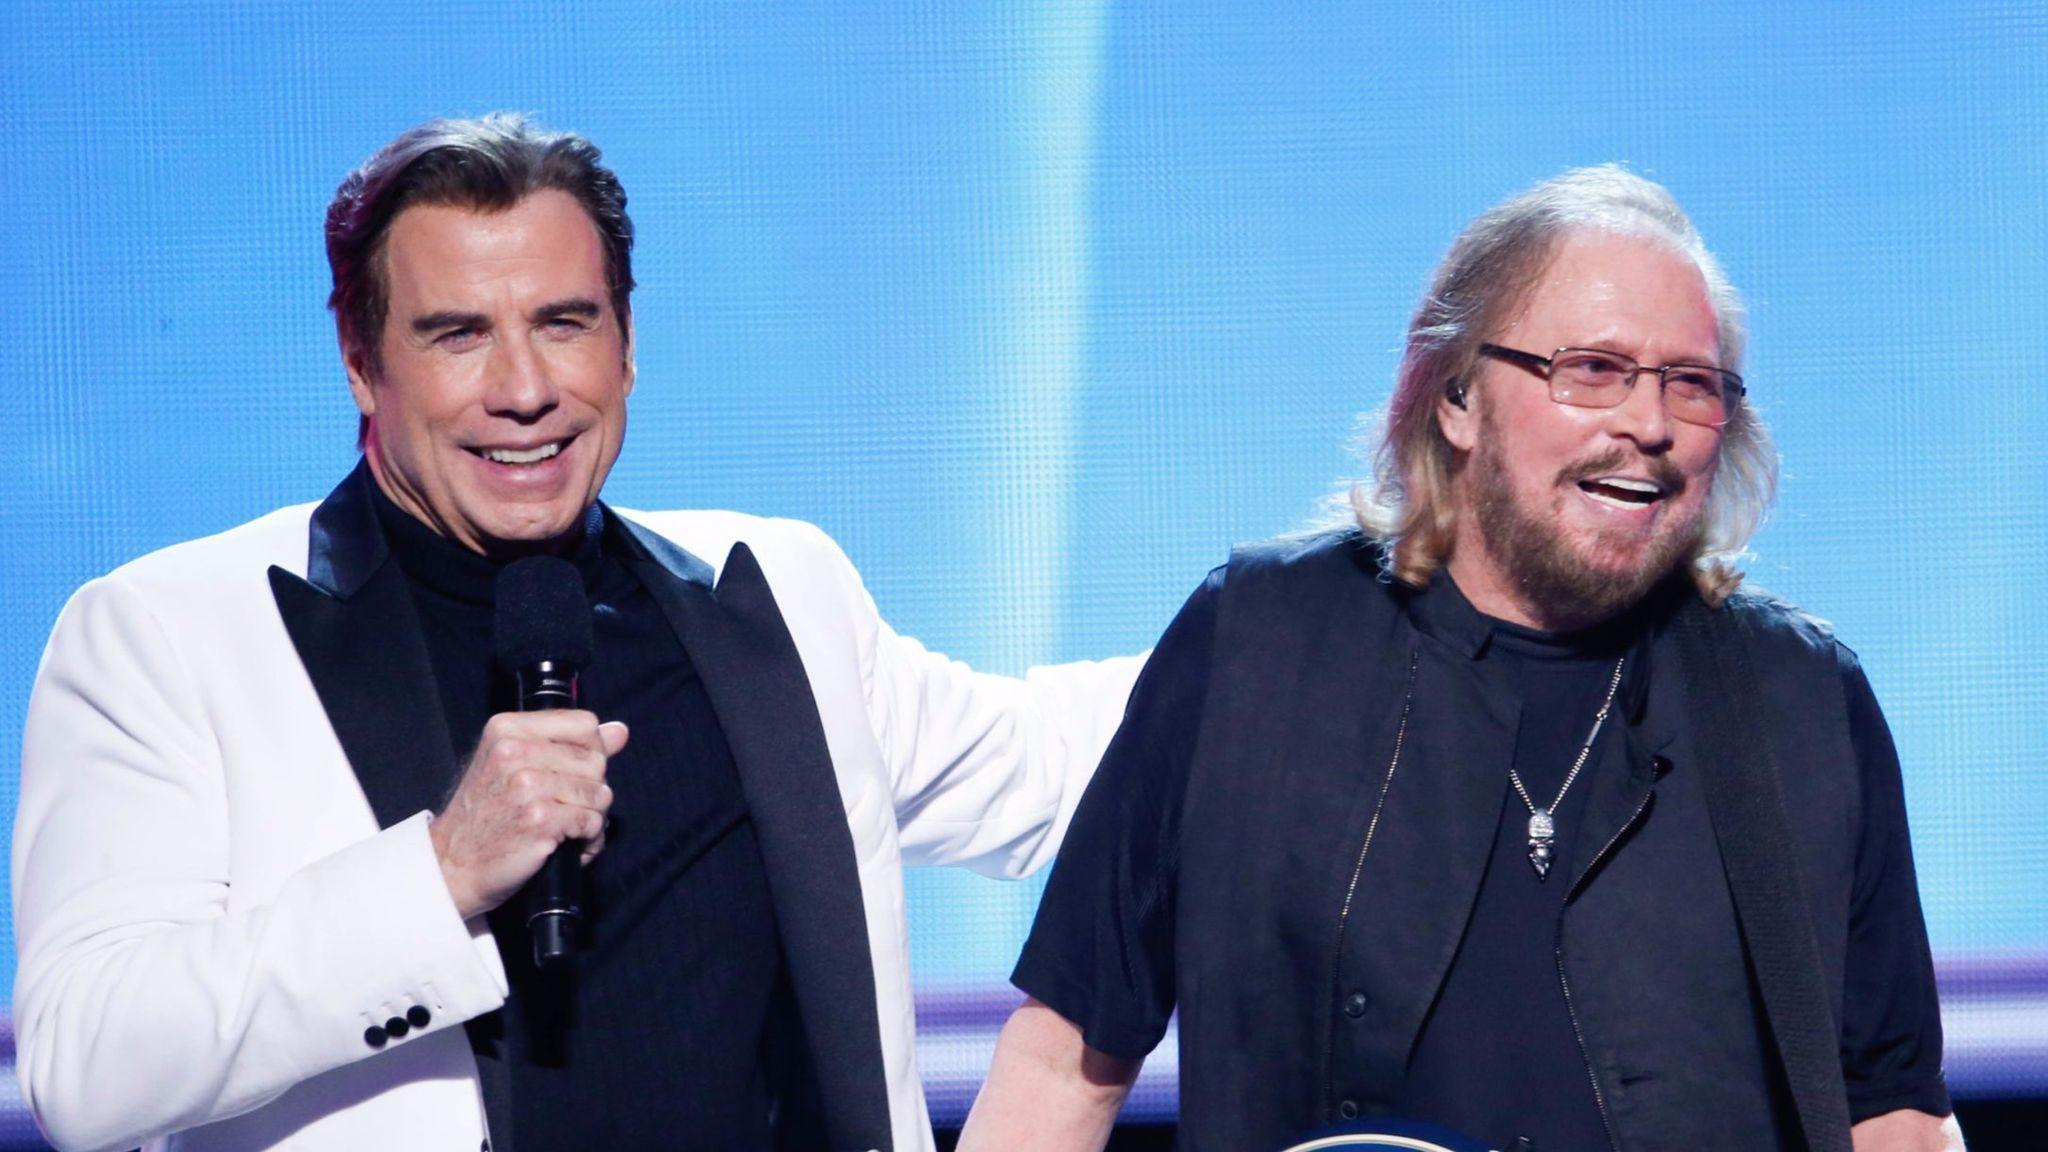 Bee Gees tribute: Dion, Wonder, Sheeran take part